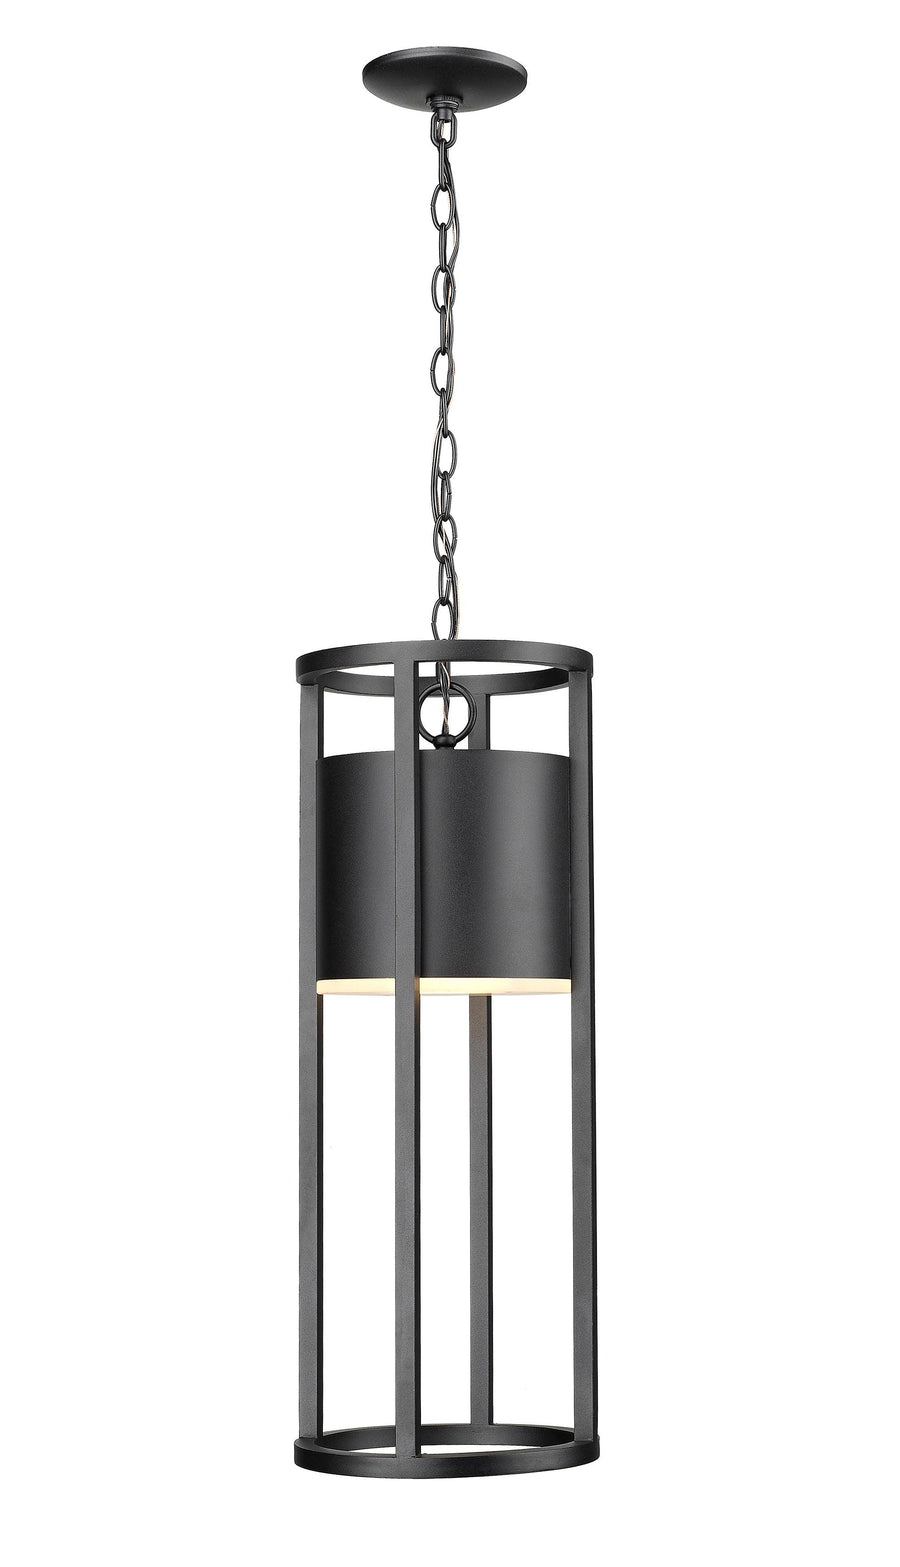 Luca-1 Light Outdoor Chain Mount Ceiling Fixture - Maison Vogue